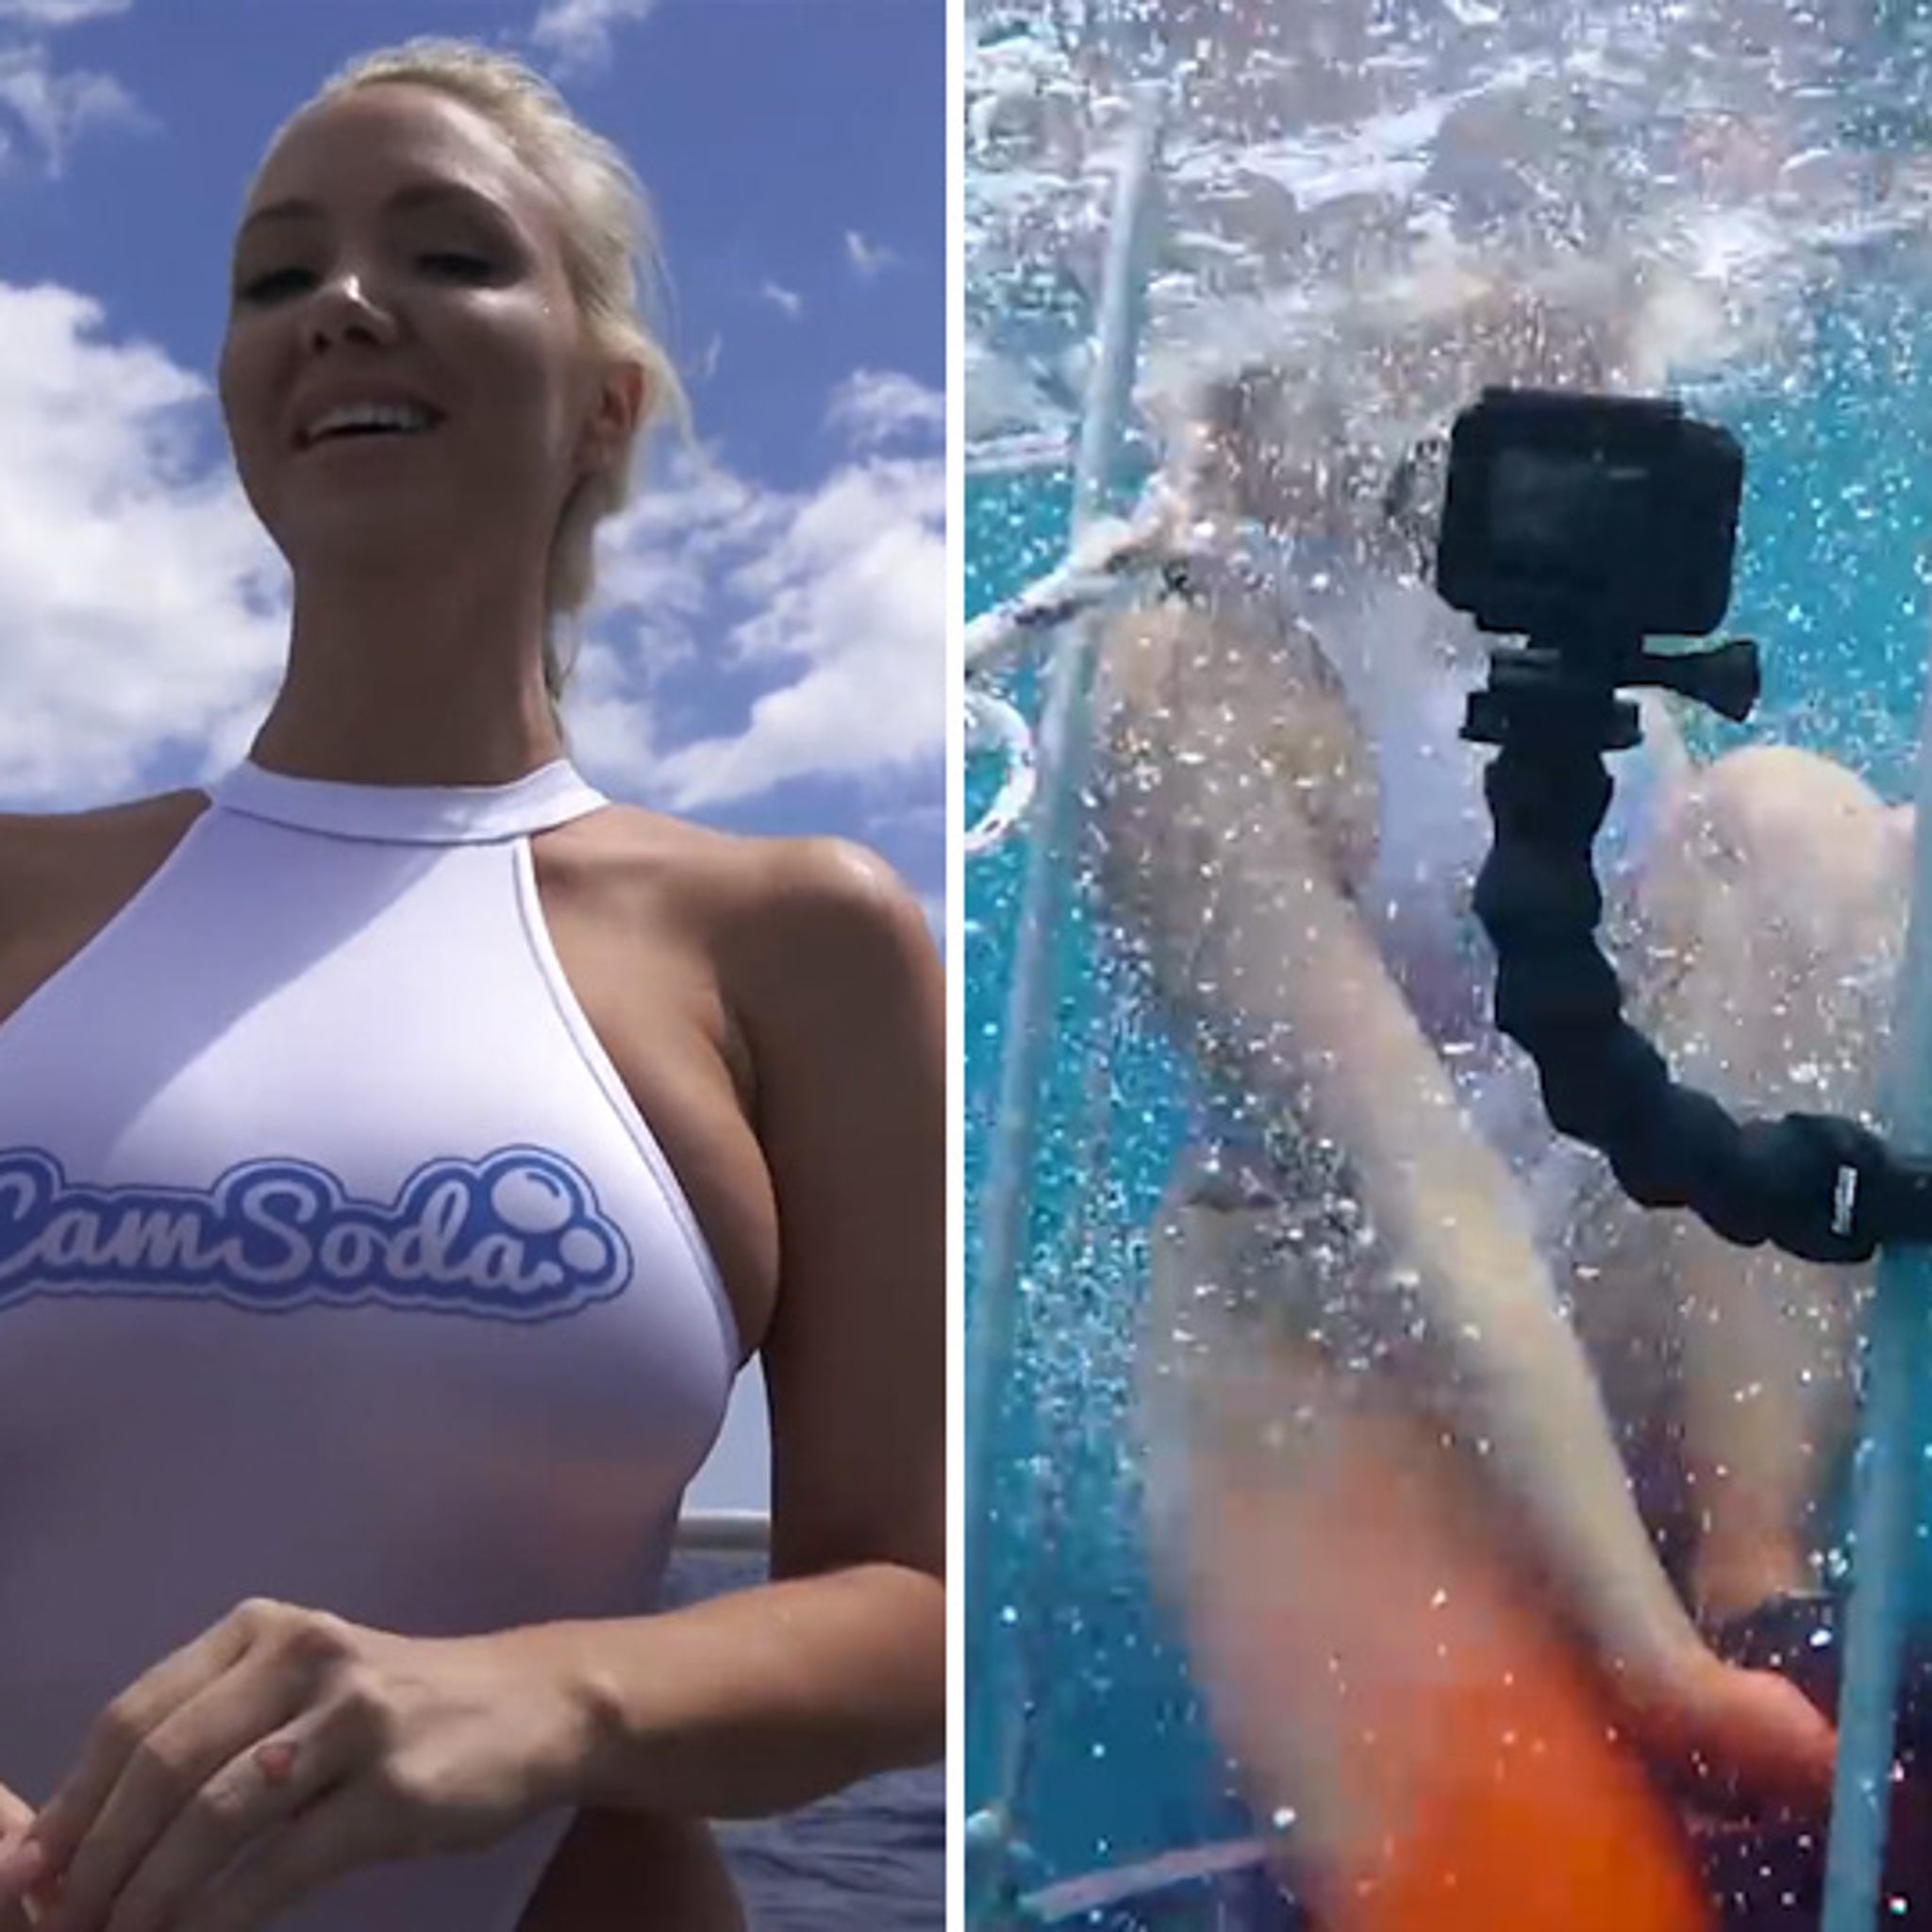 Filming A Porn Scene - Porn Star Bitten by Shark While Filming Underwater Scene